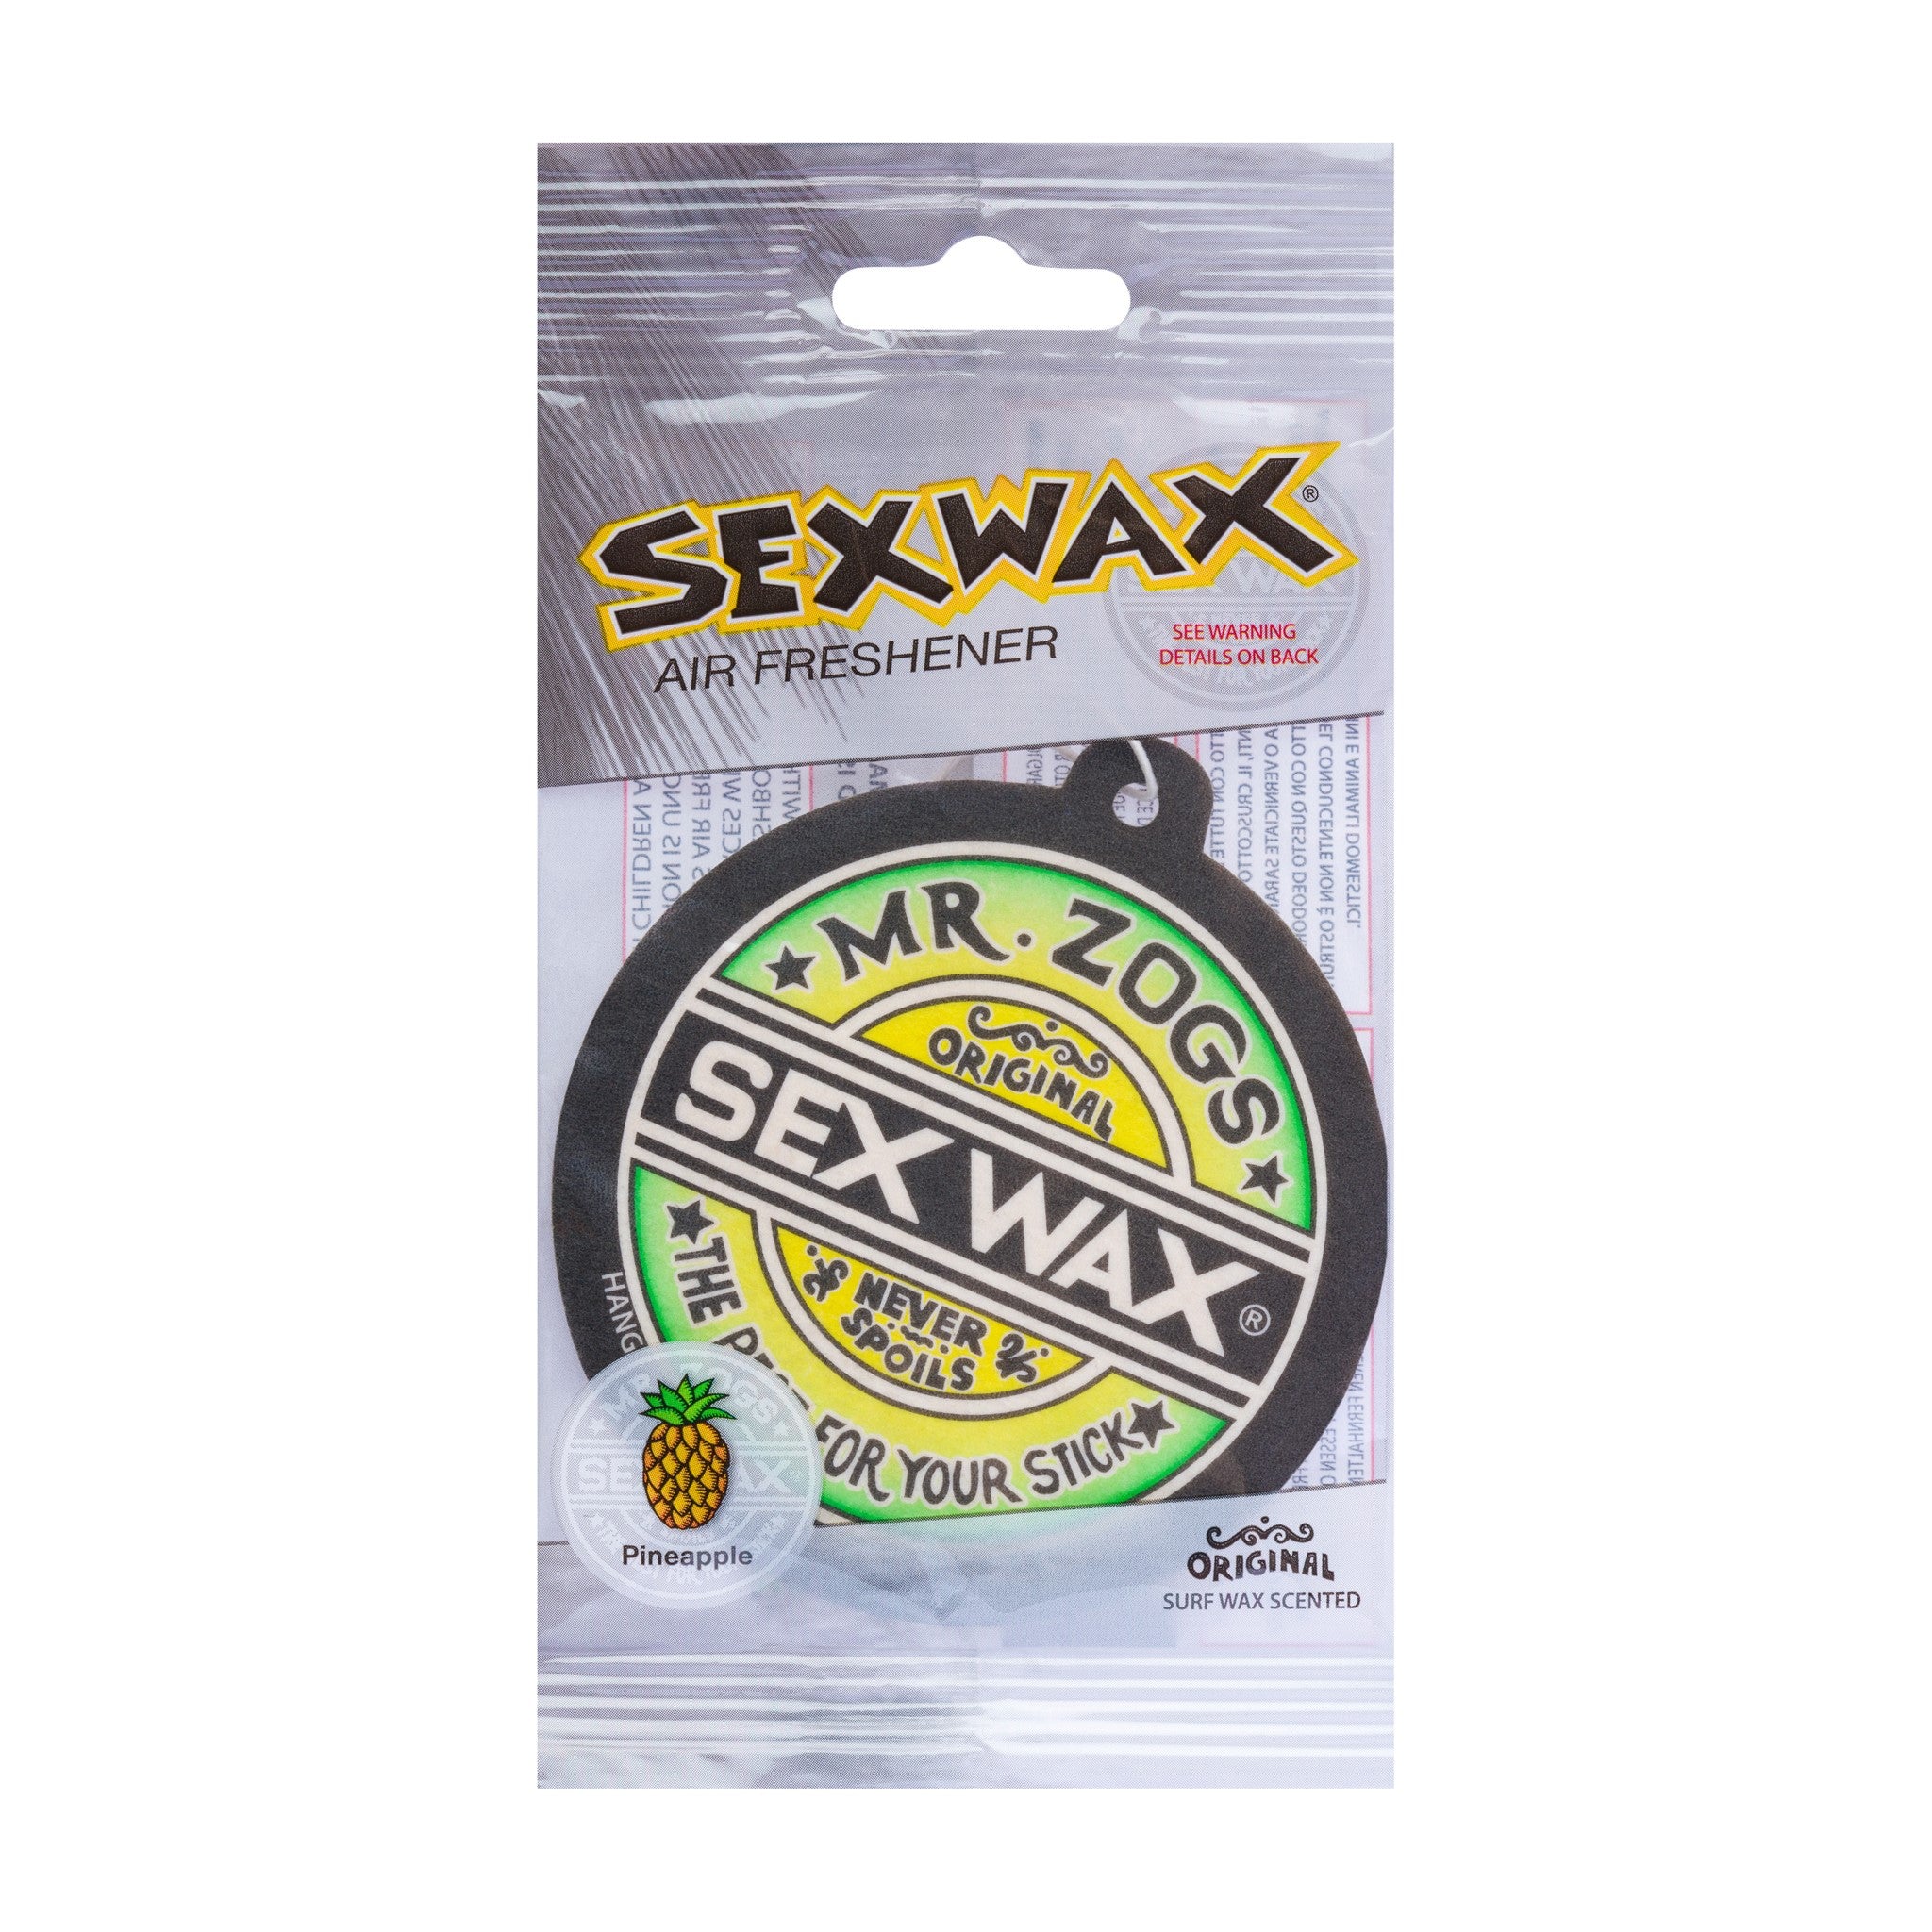 New skateboards surf wax from Sex Wax